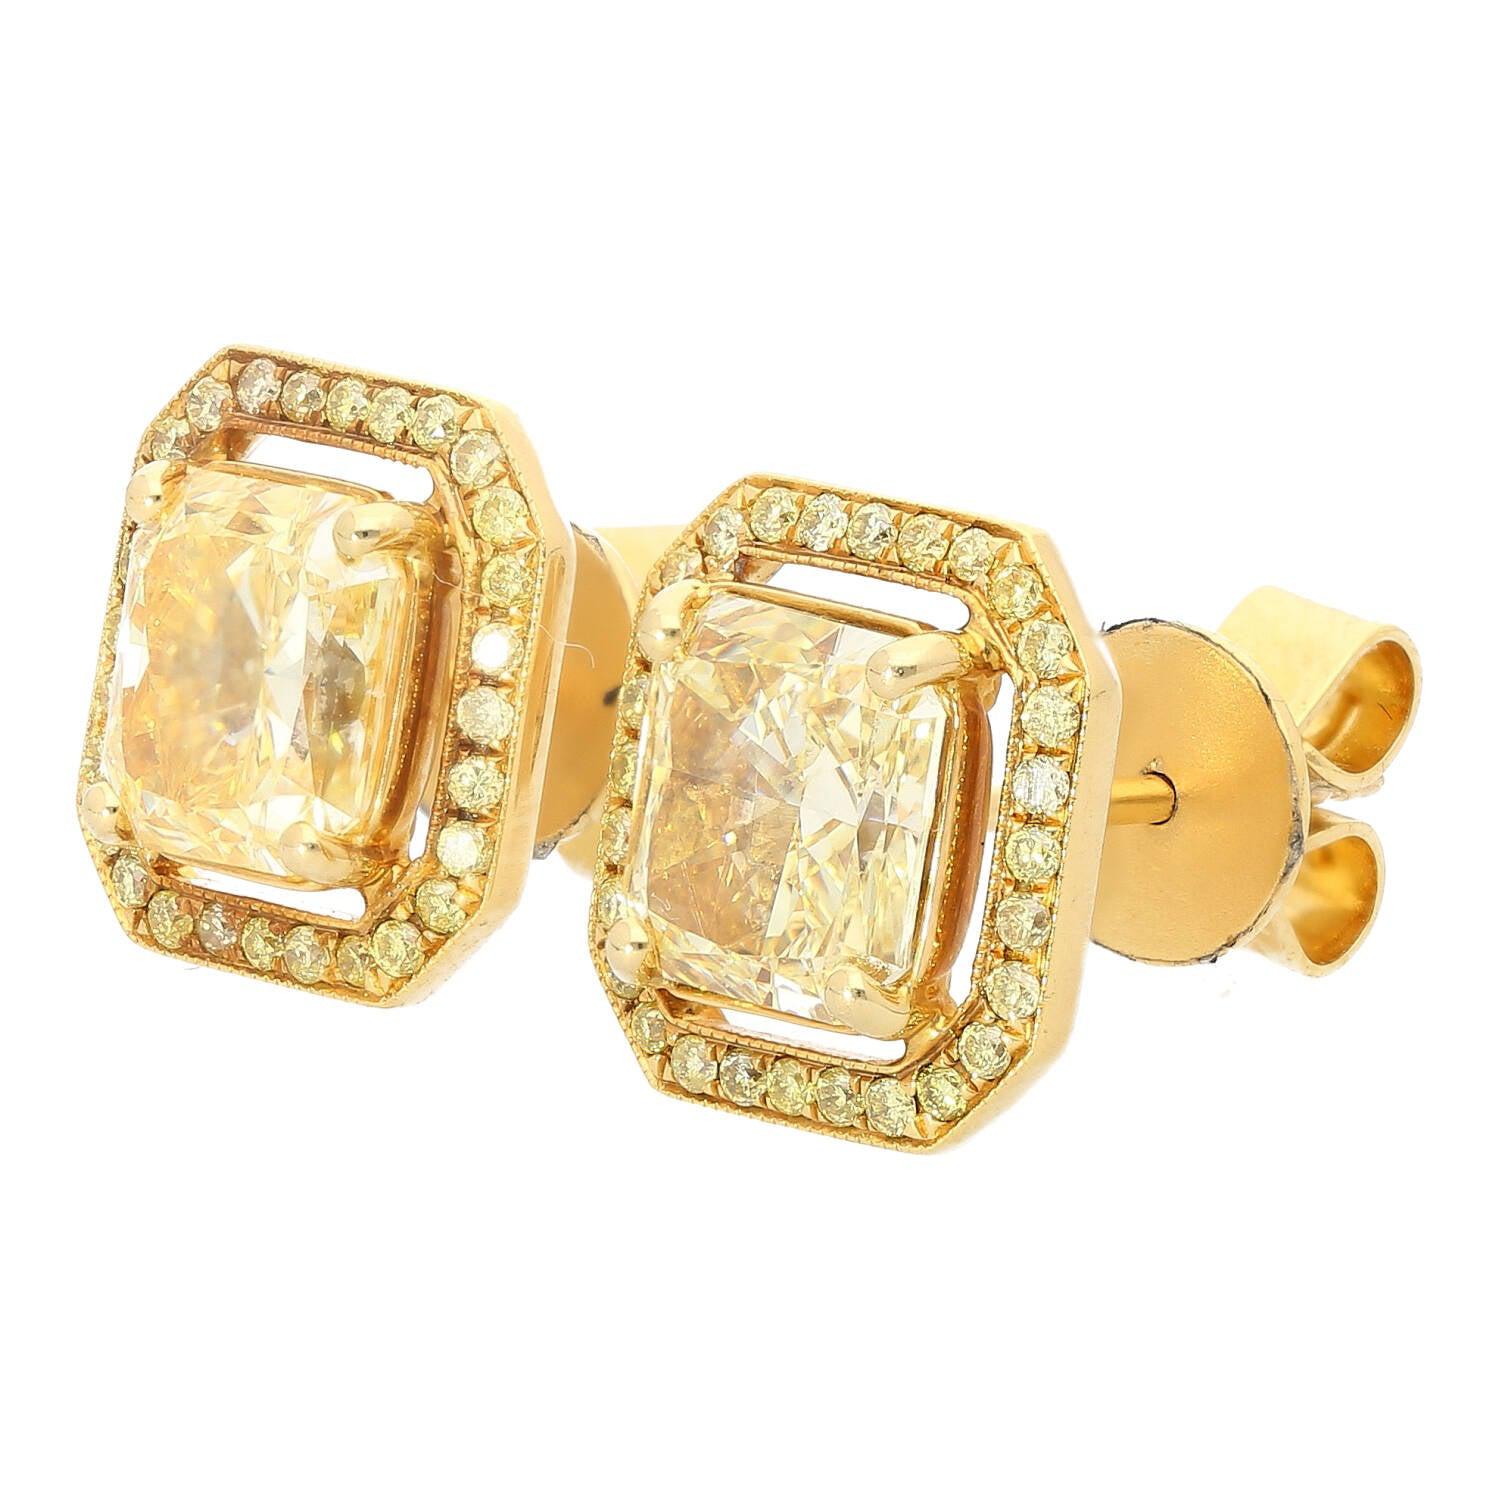 GIA Certified Natural 3 Carat TW Fancy Yellow Diamond Radiant Cut Stud Earrings in 18K Gold